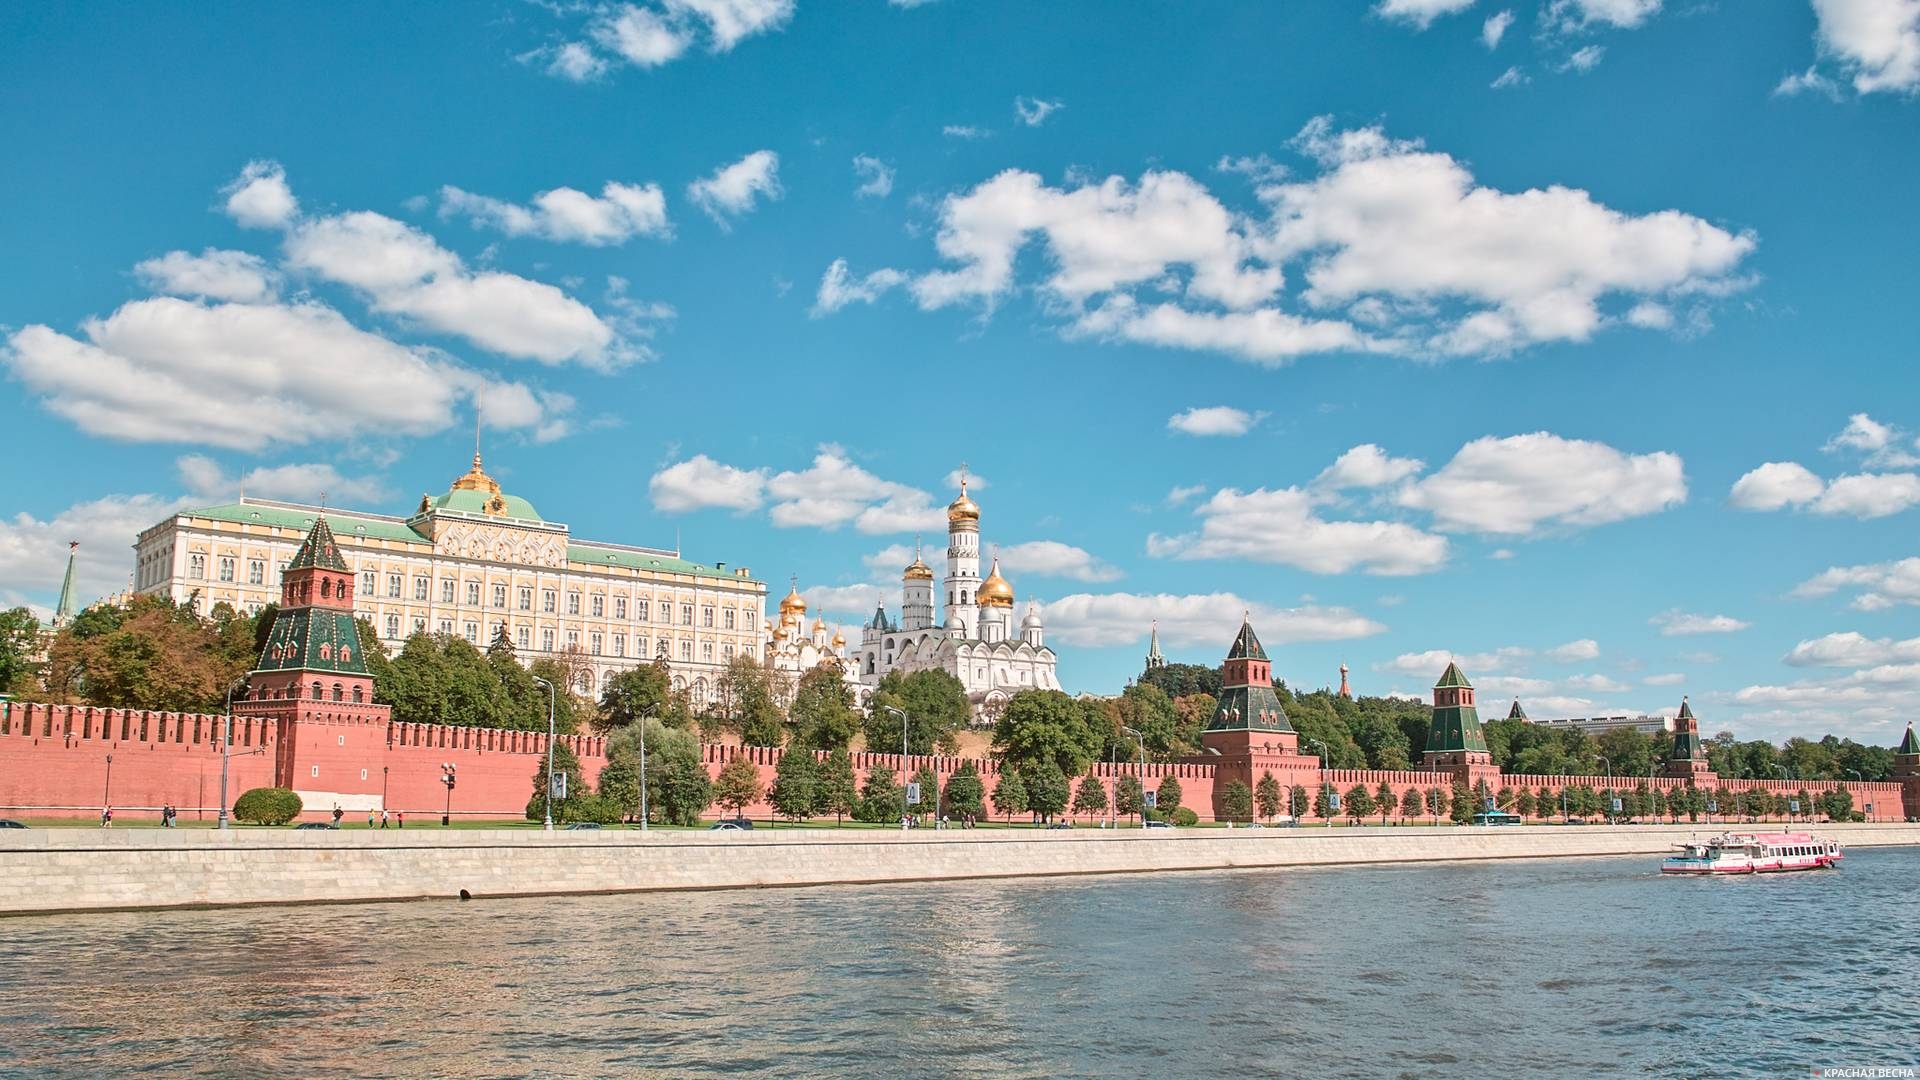 Кремль. Вид с реки. Москва. 